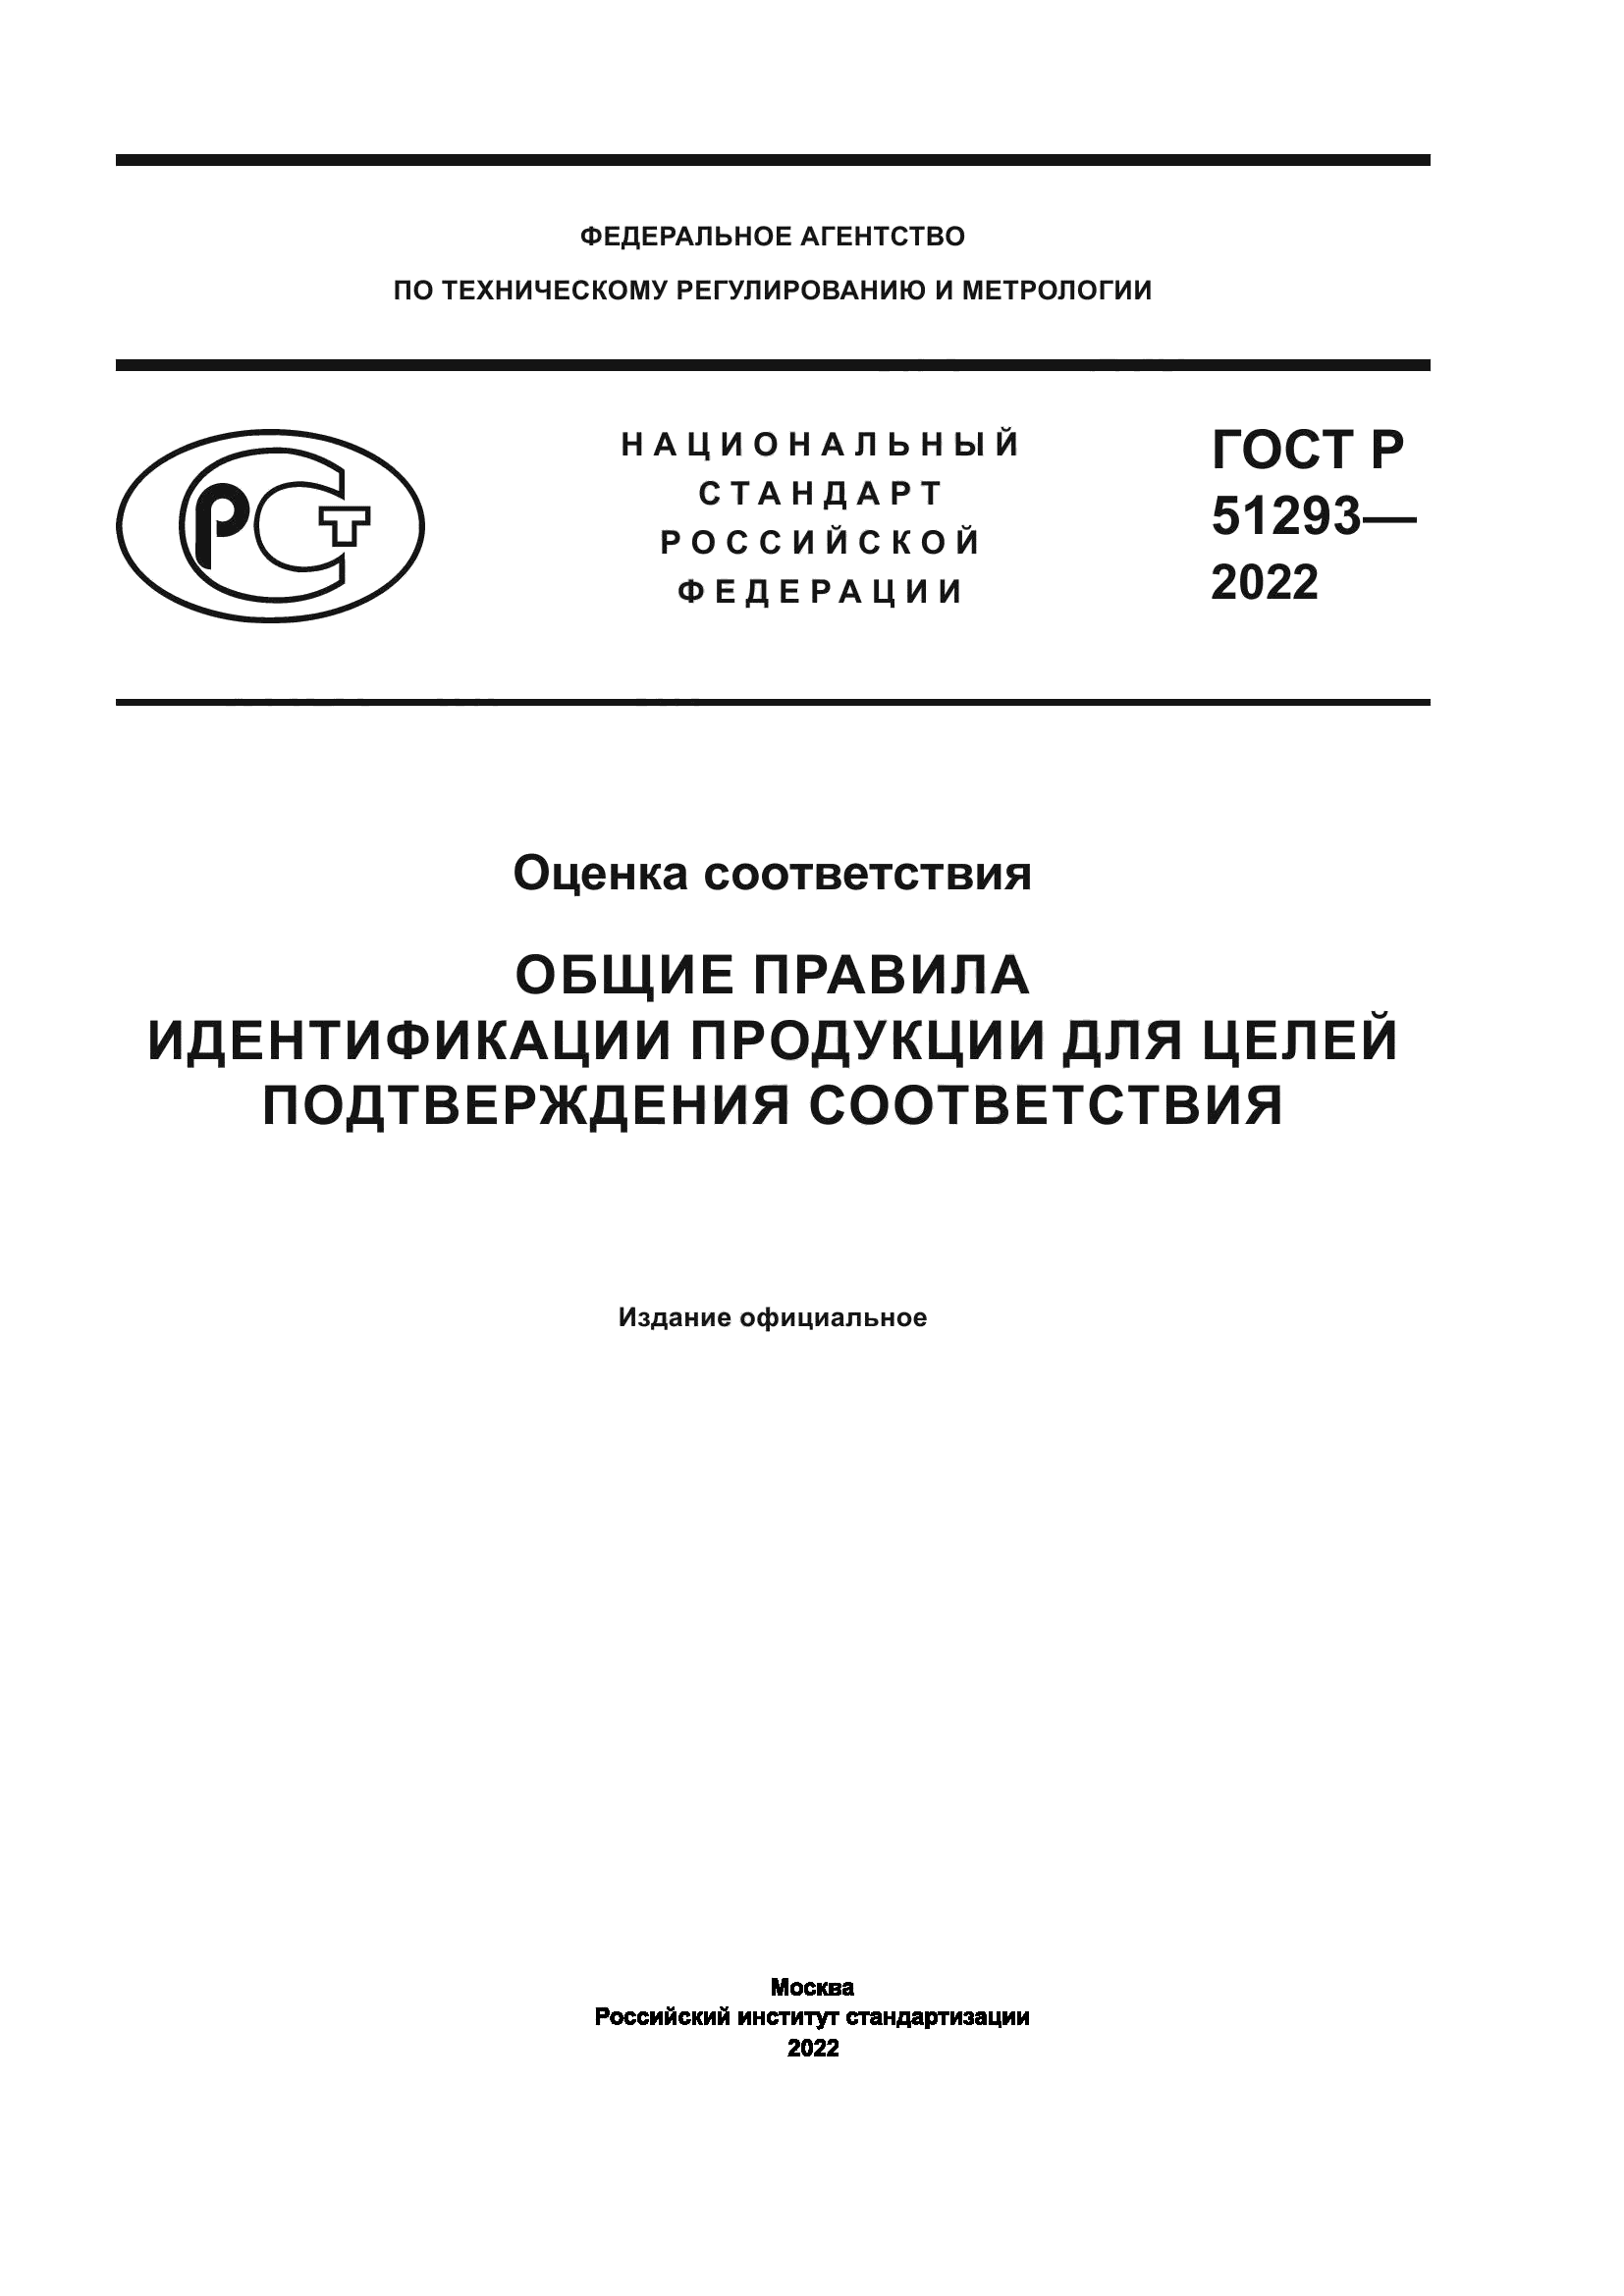 ГОСТ Р 51293-2022